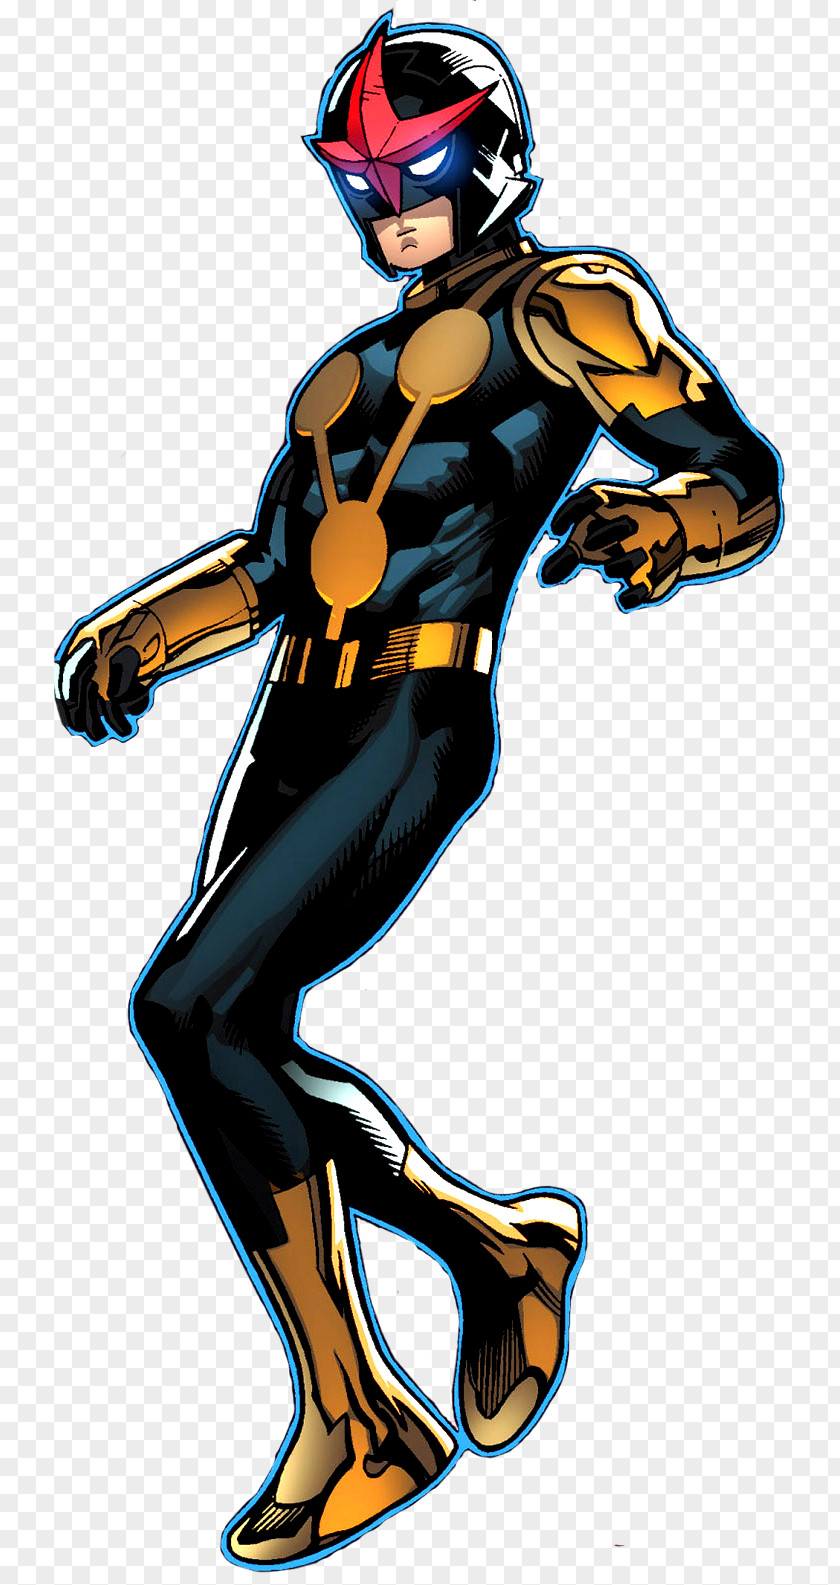 Marvel Nova Star-Lord Iron Fist Heroes 2016 Spider-Man PNG